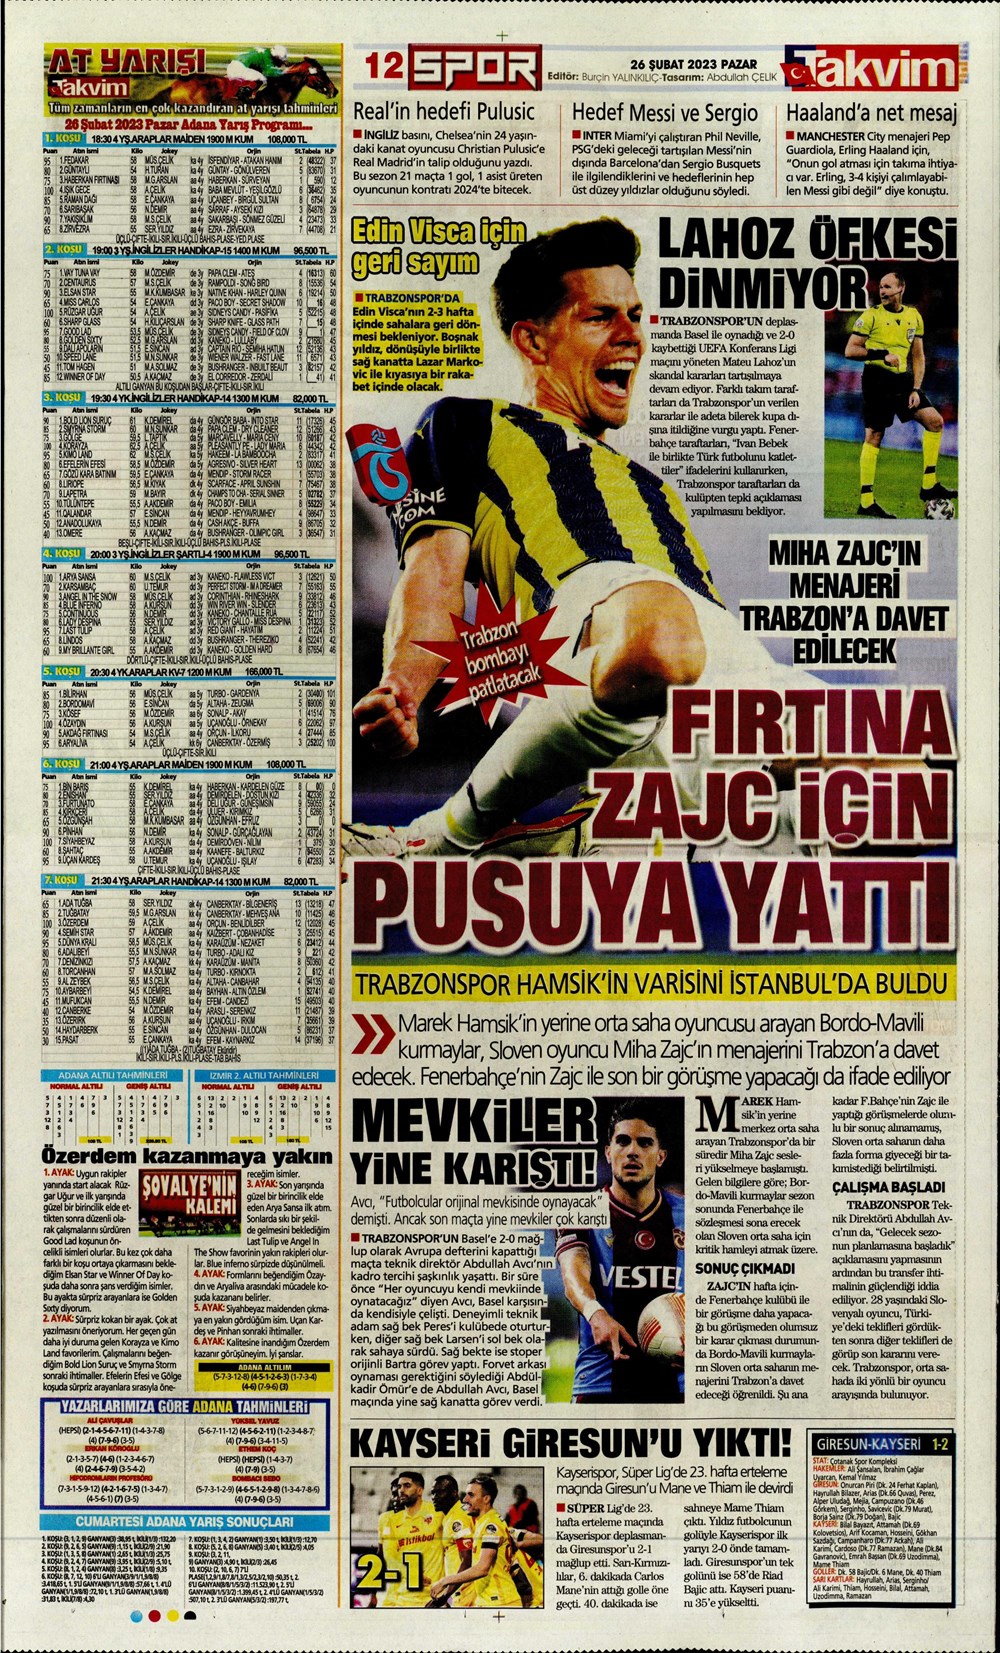 "Valenci'ağa' böyle istedi" - Sporun manşetleri  - 28. Foto